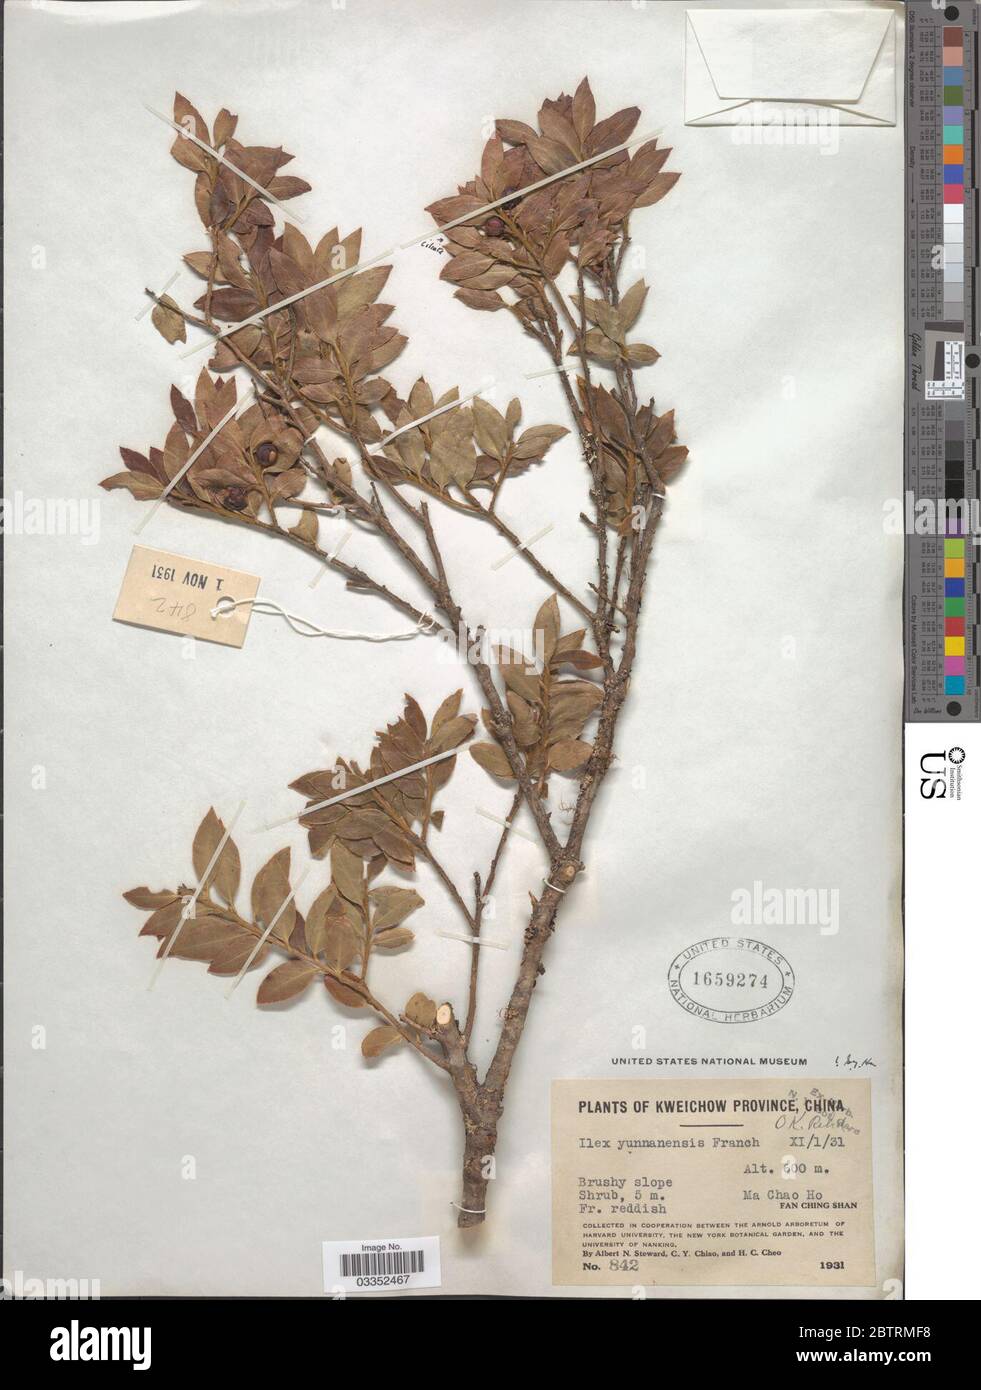 Ilex yunnanensis Franch. Stock Photo